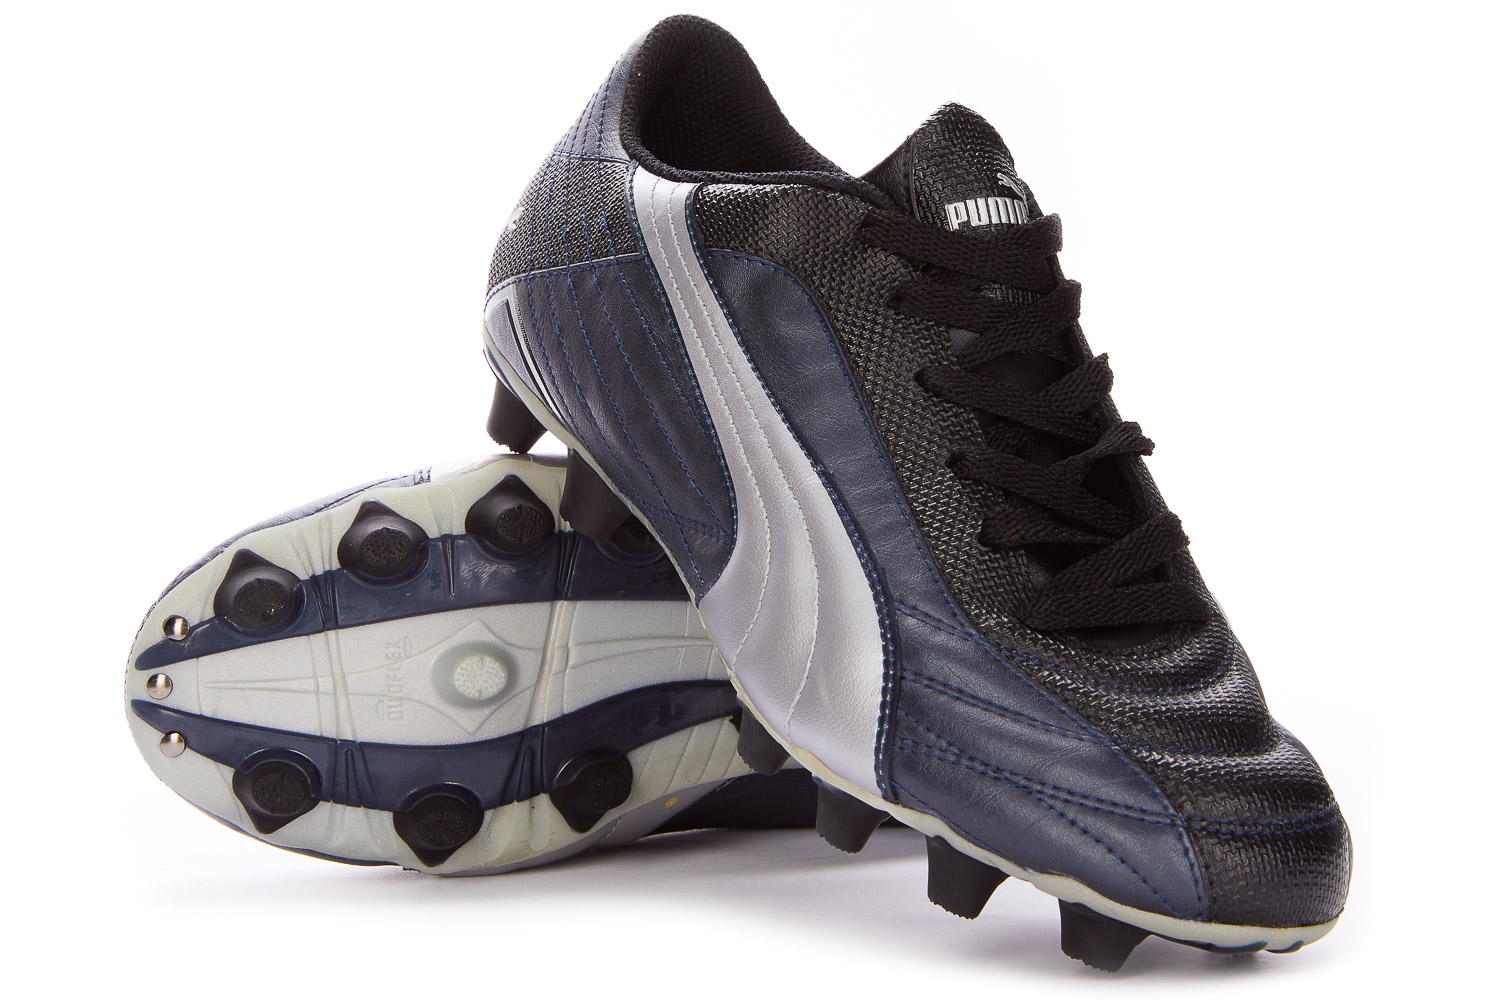 2002 Puma Torceira I Football Boots *In Box* FG 8½